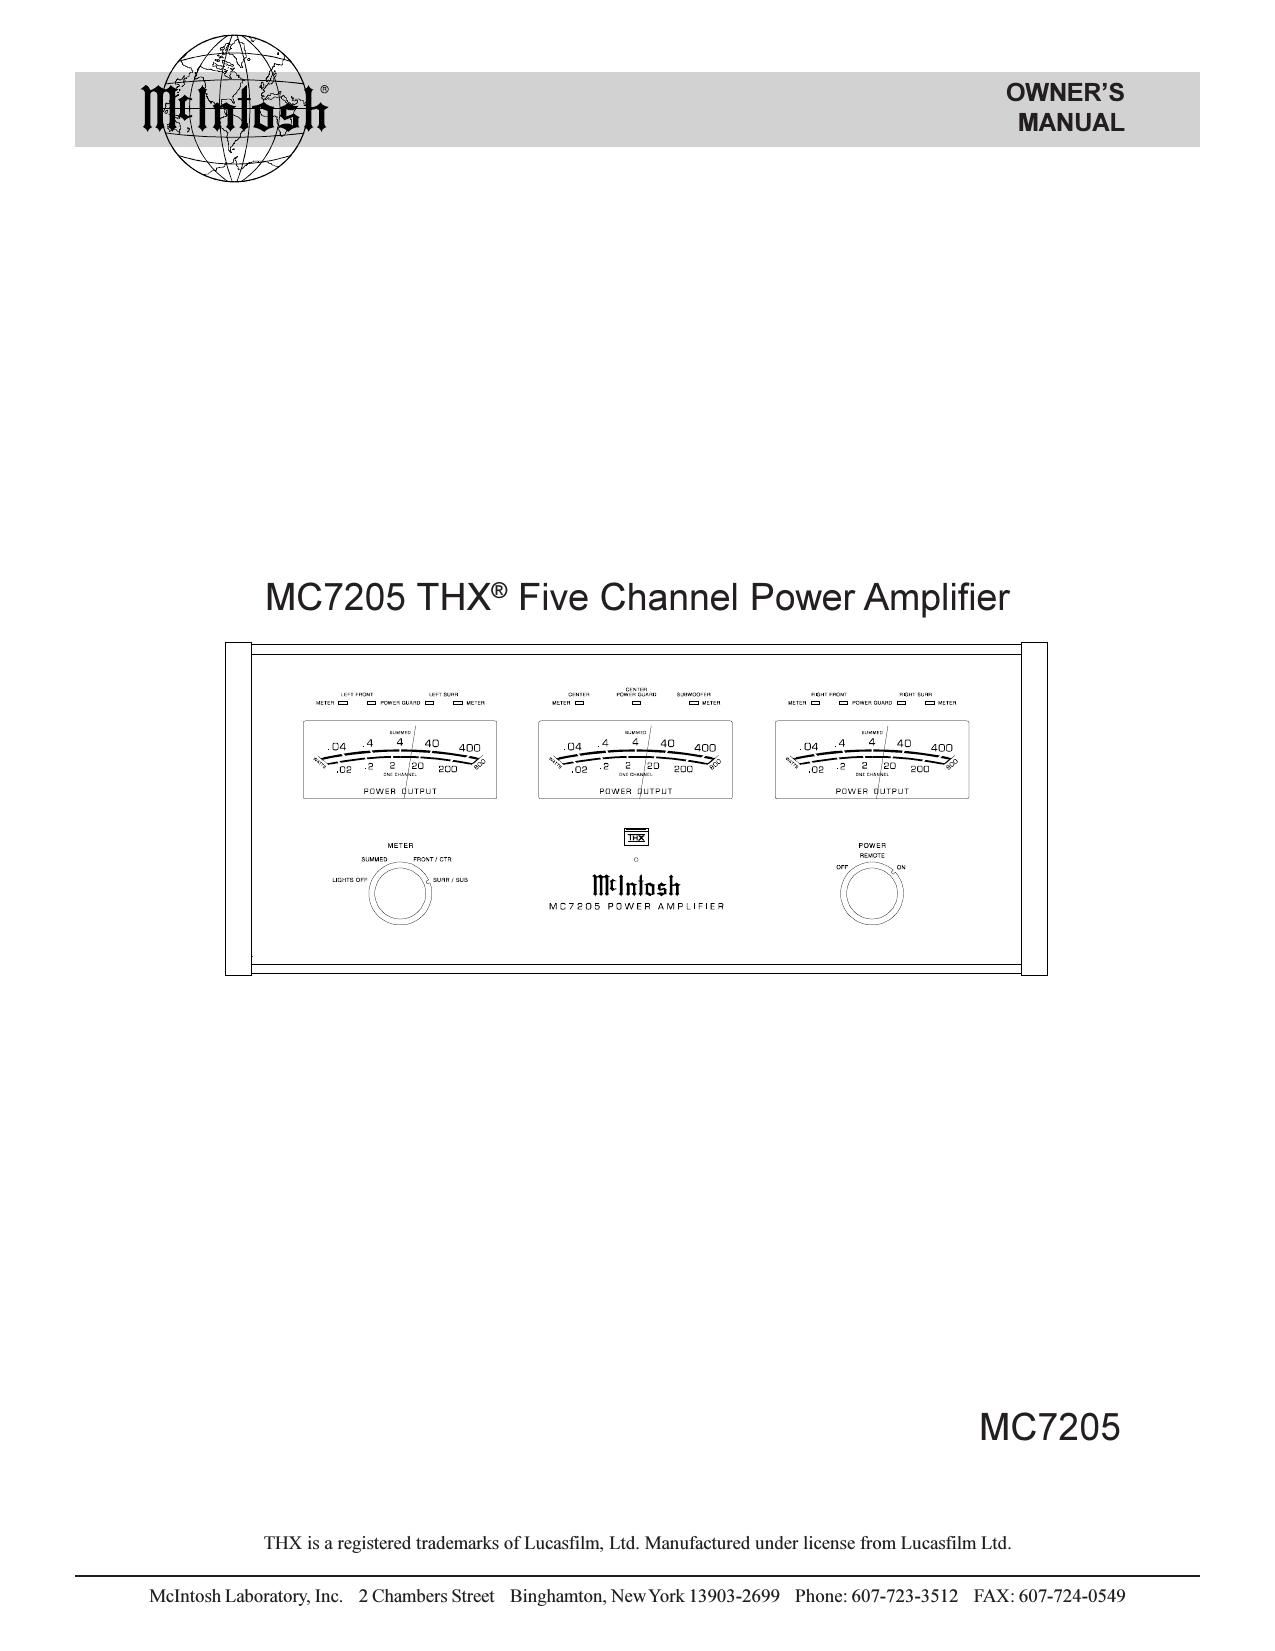 McIntosh MC 7205 Owners Manual